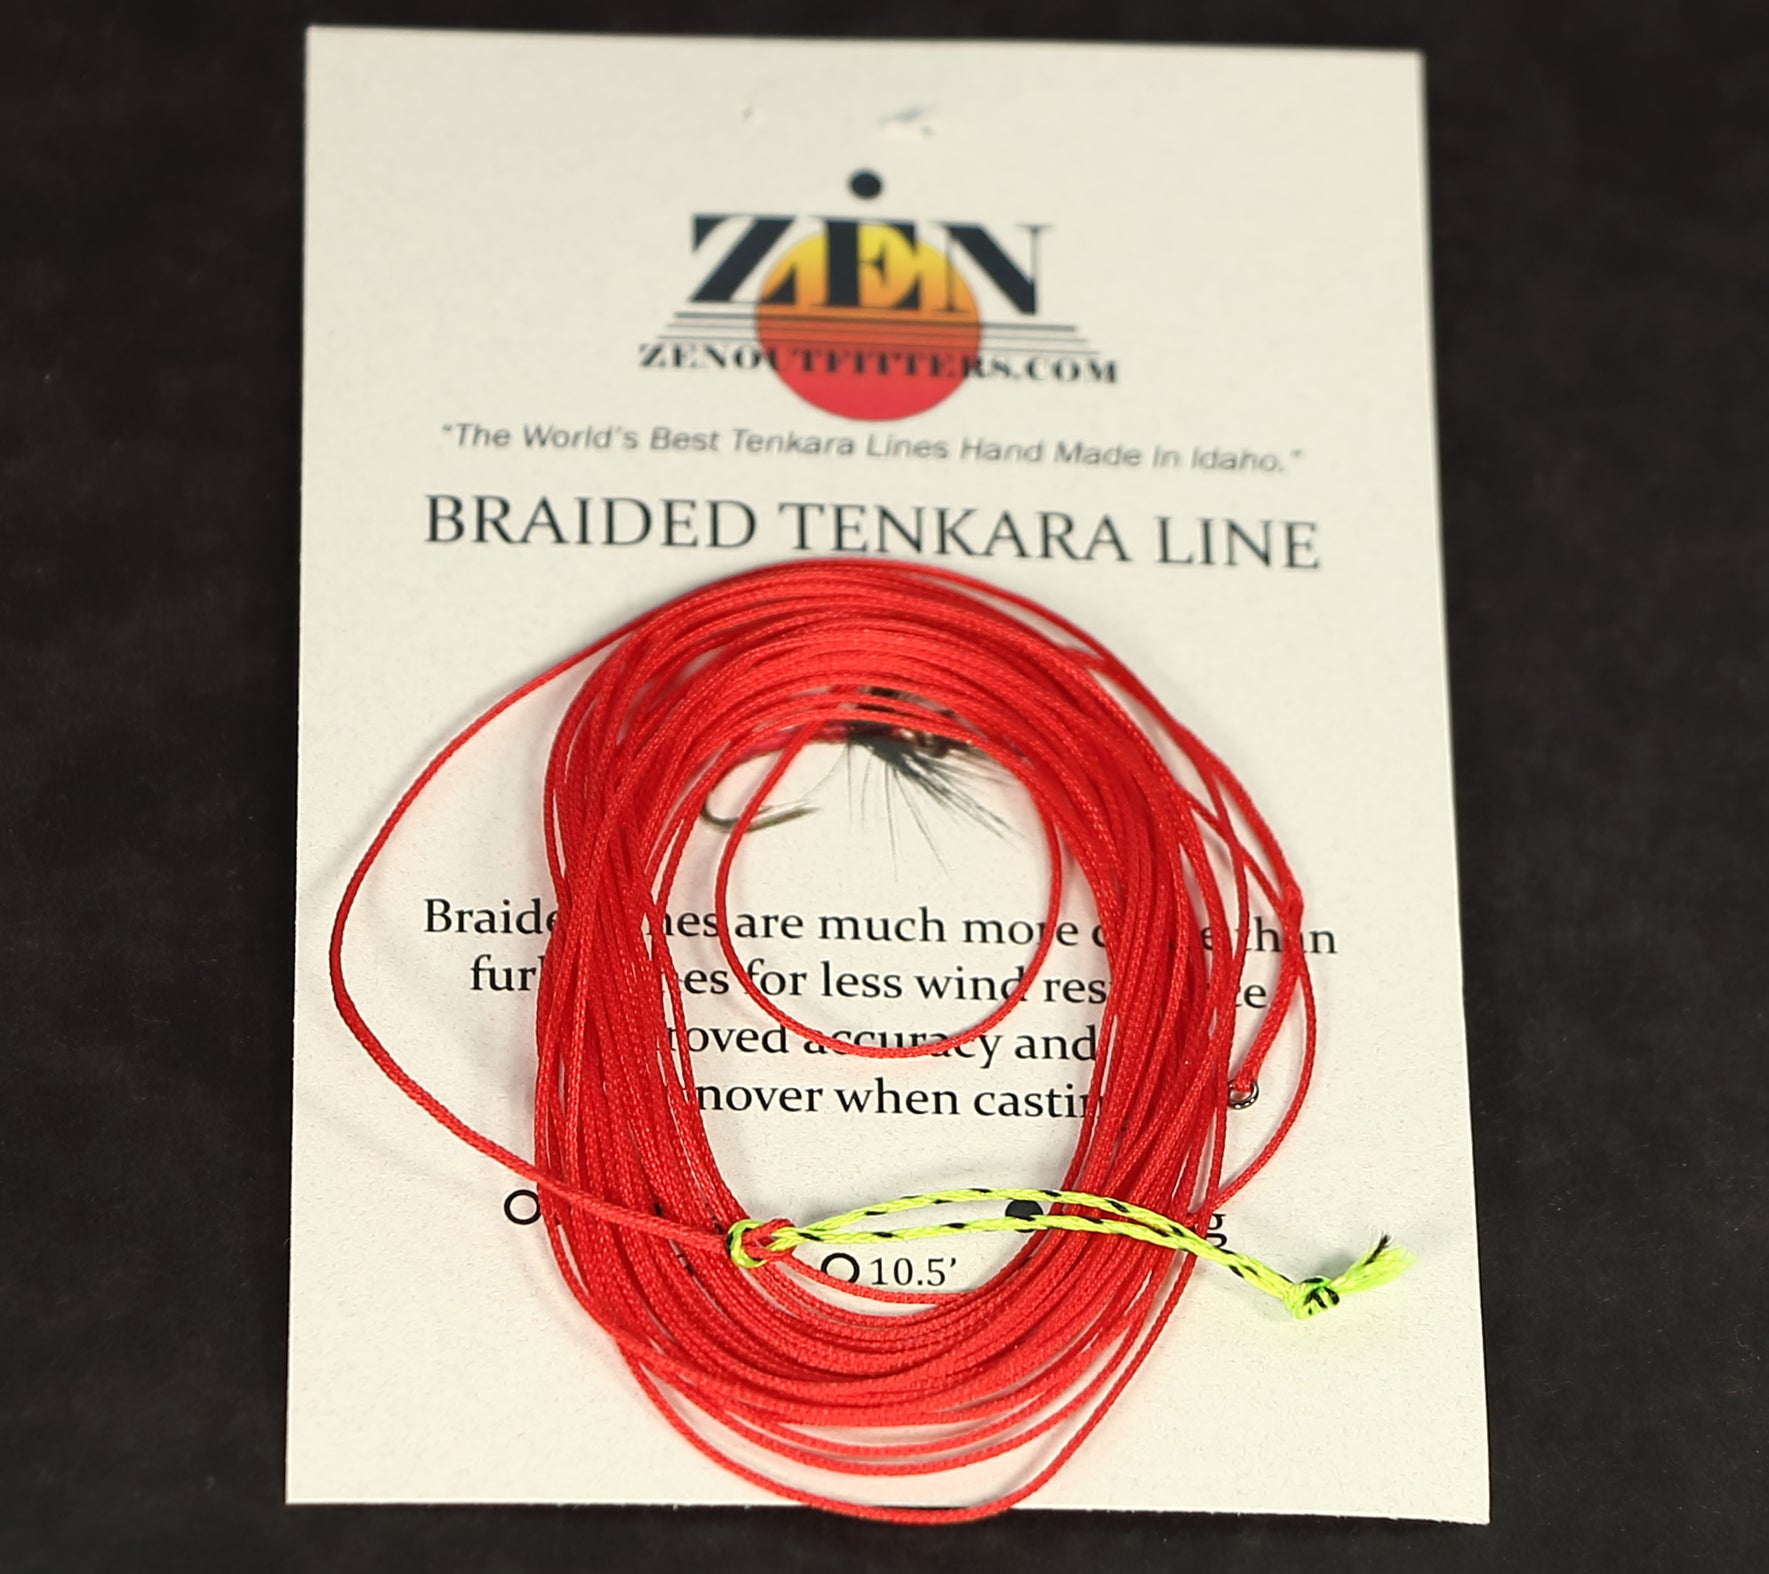 Braided Tenkara Line